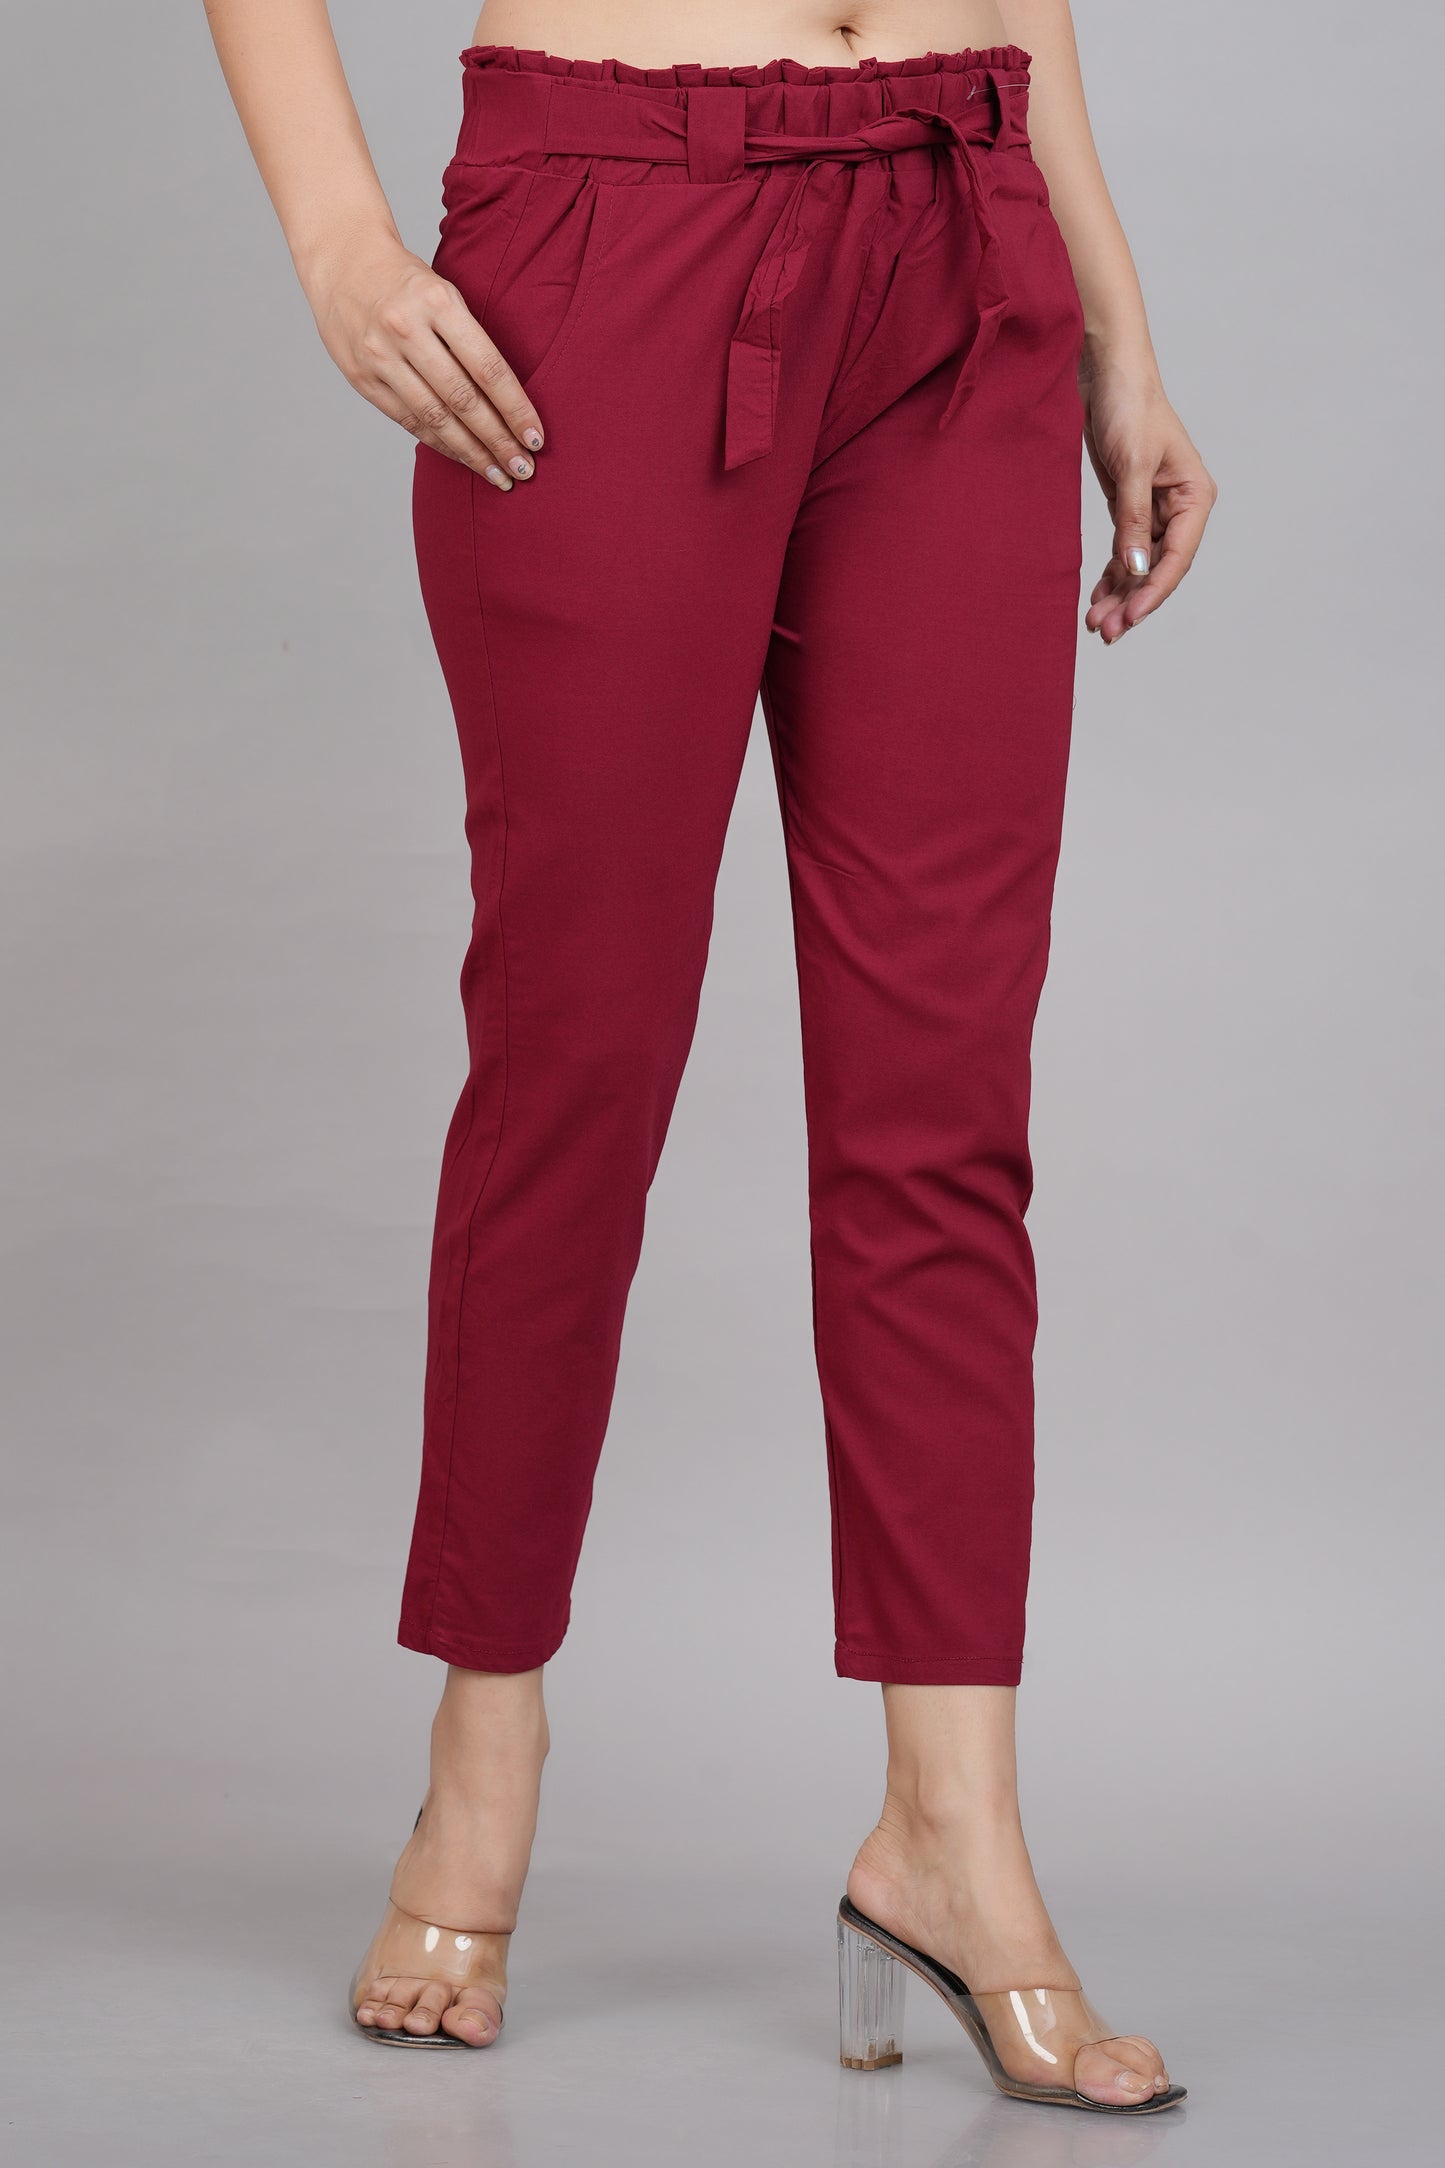 Yash Gallery Women's Lycra Regular Fit Casual Trouser Pants (Maroon)